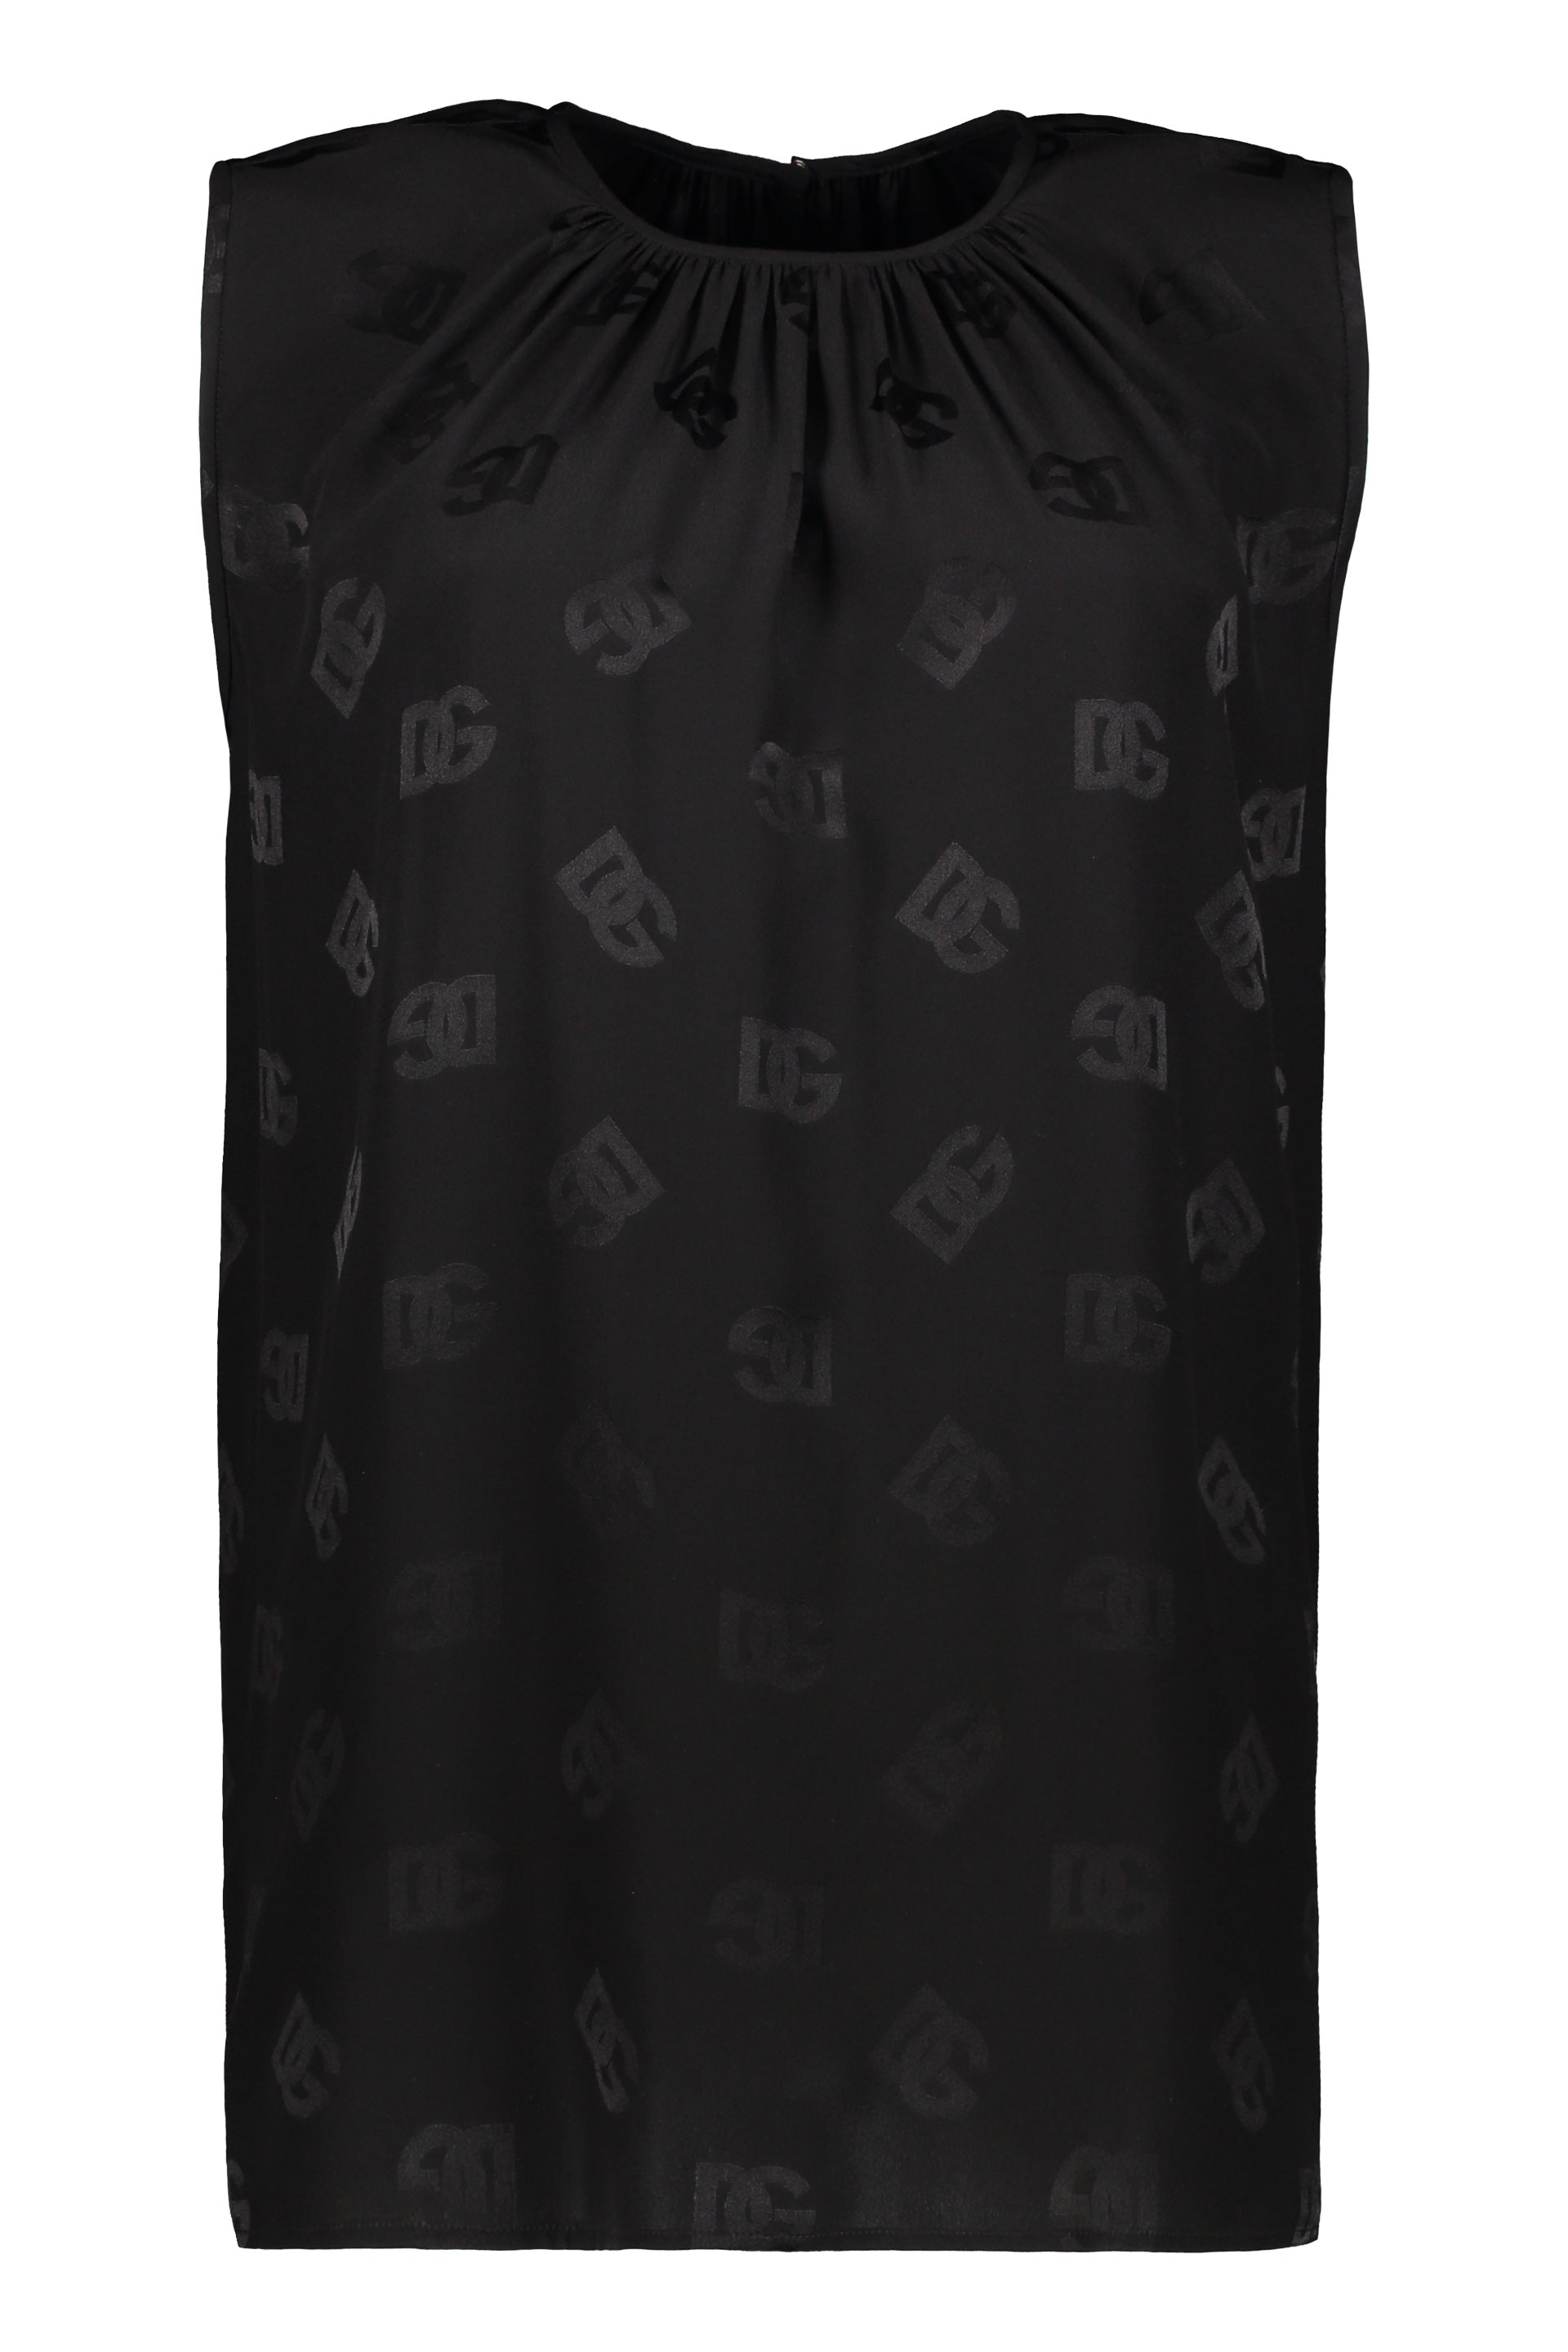 Dolce-Gabbana-OUTLET-SALE-Silk-blouse-Blusen-40-ARCHIVE-COLLECTION.jpg